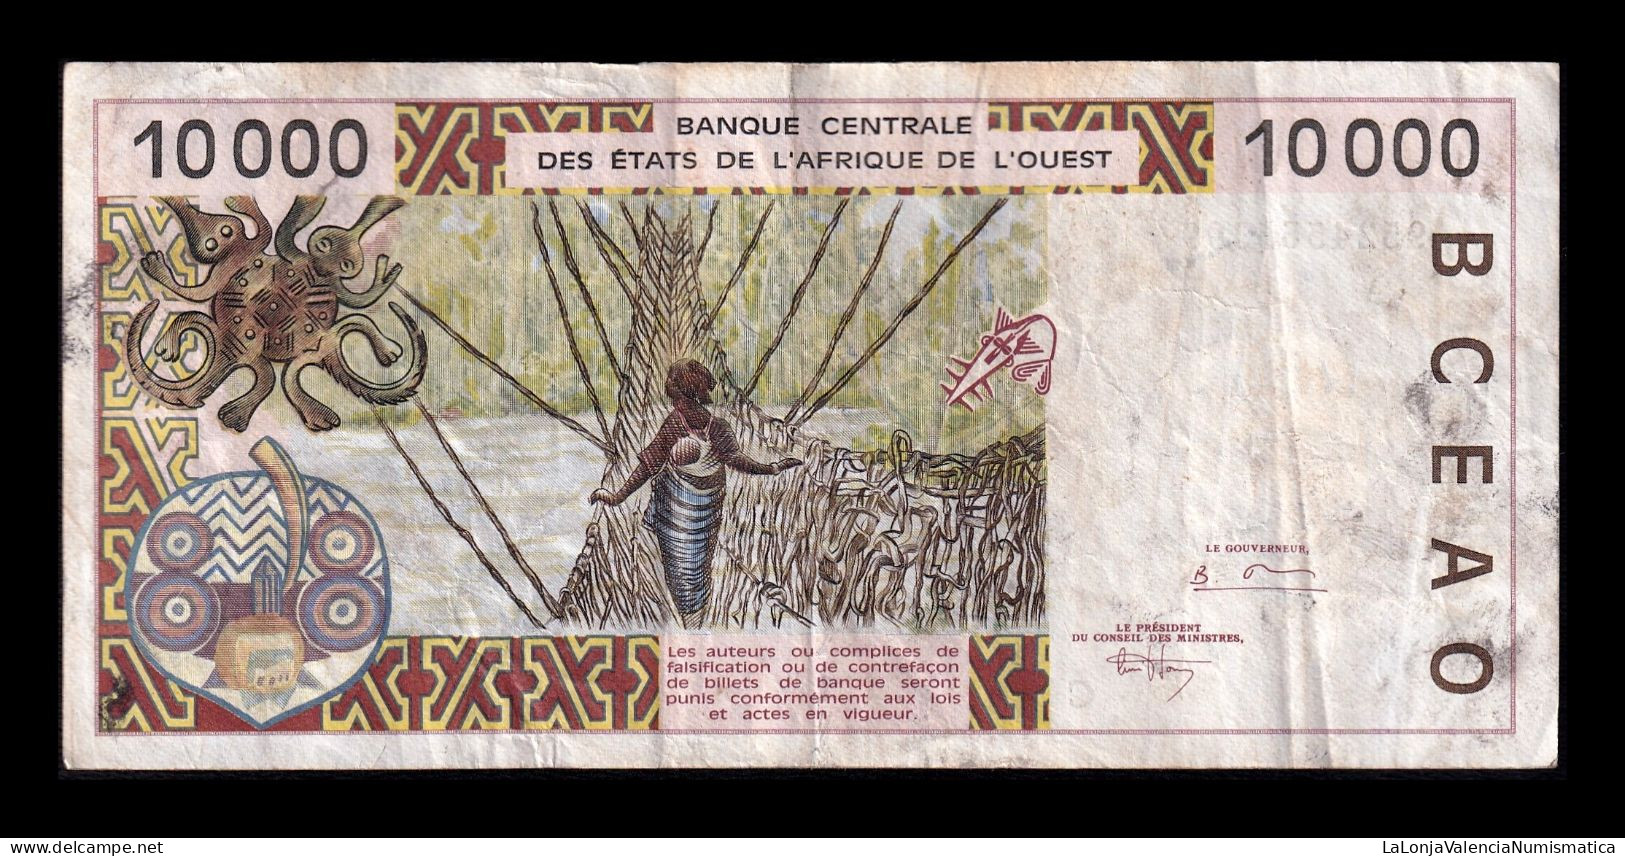 West African St. Burkina Faso 10000 Francs 1995 Pick 314Cc Mbc Vf - Burkina Faso